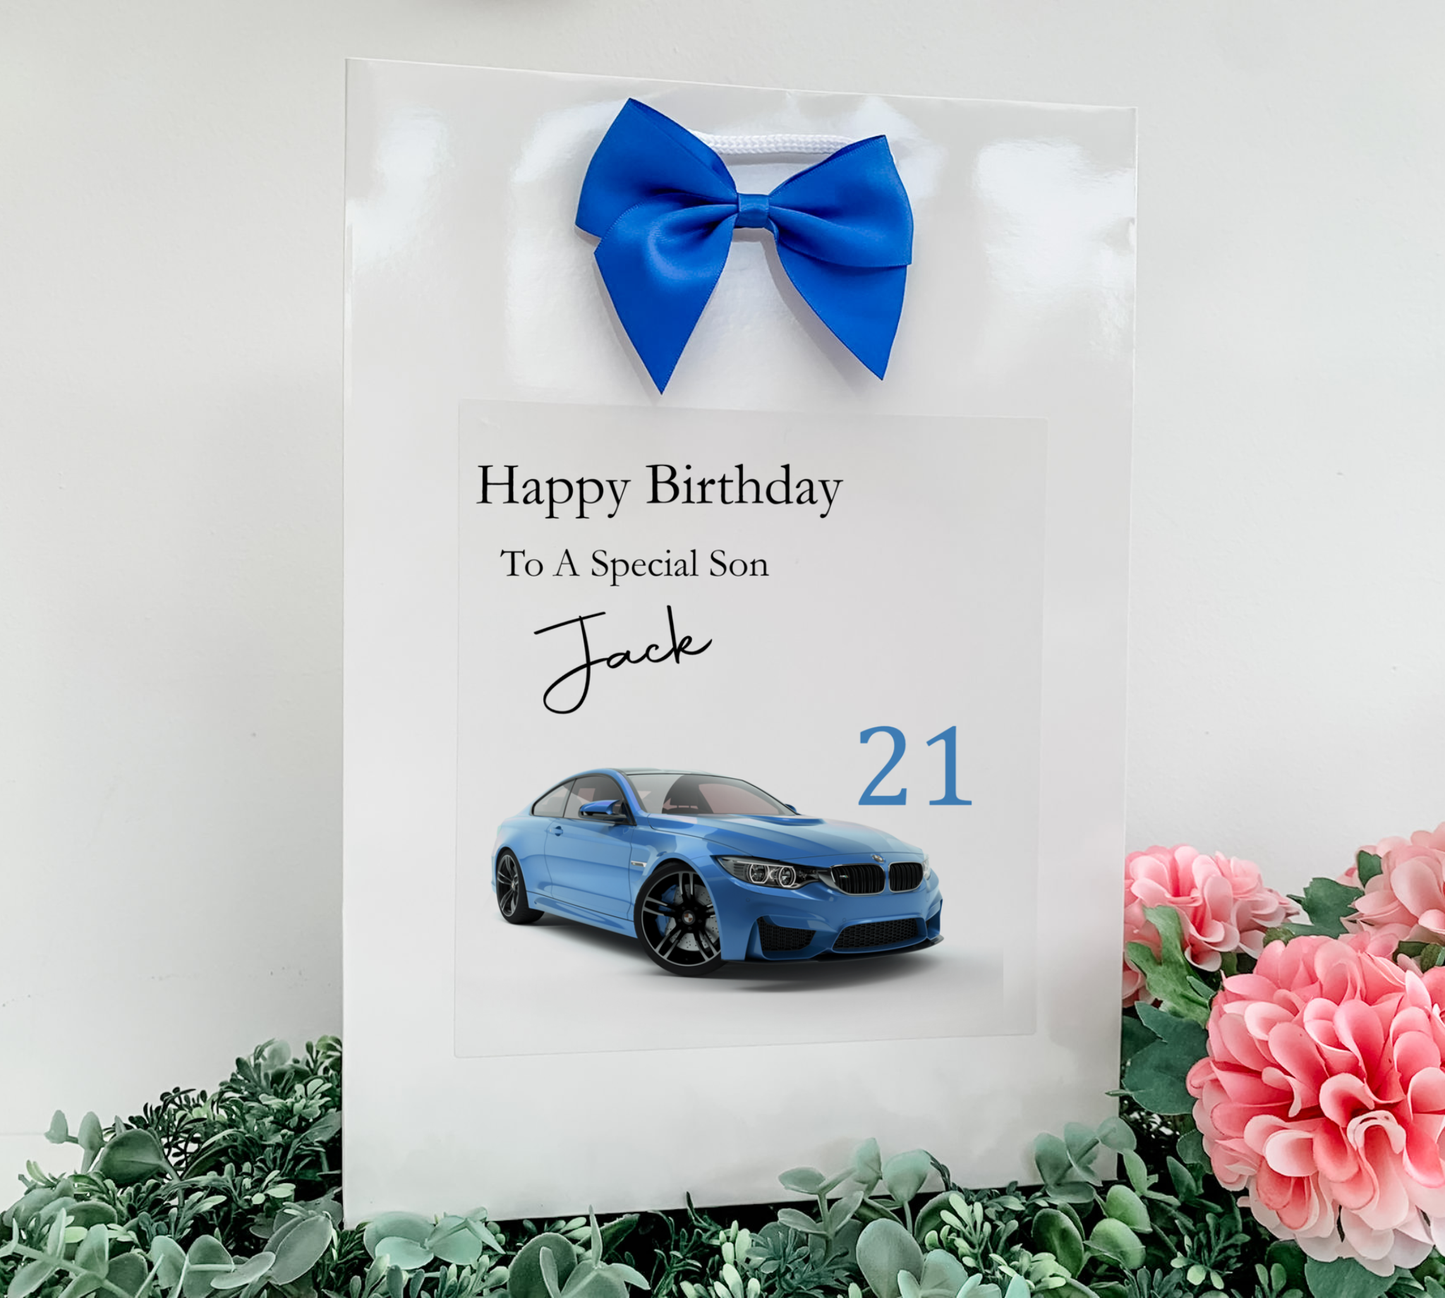 a birthday card with a blue car and a blue bow